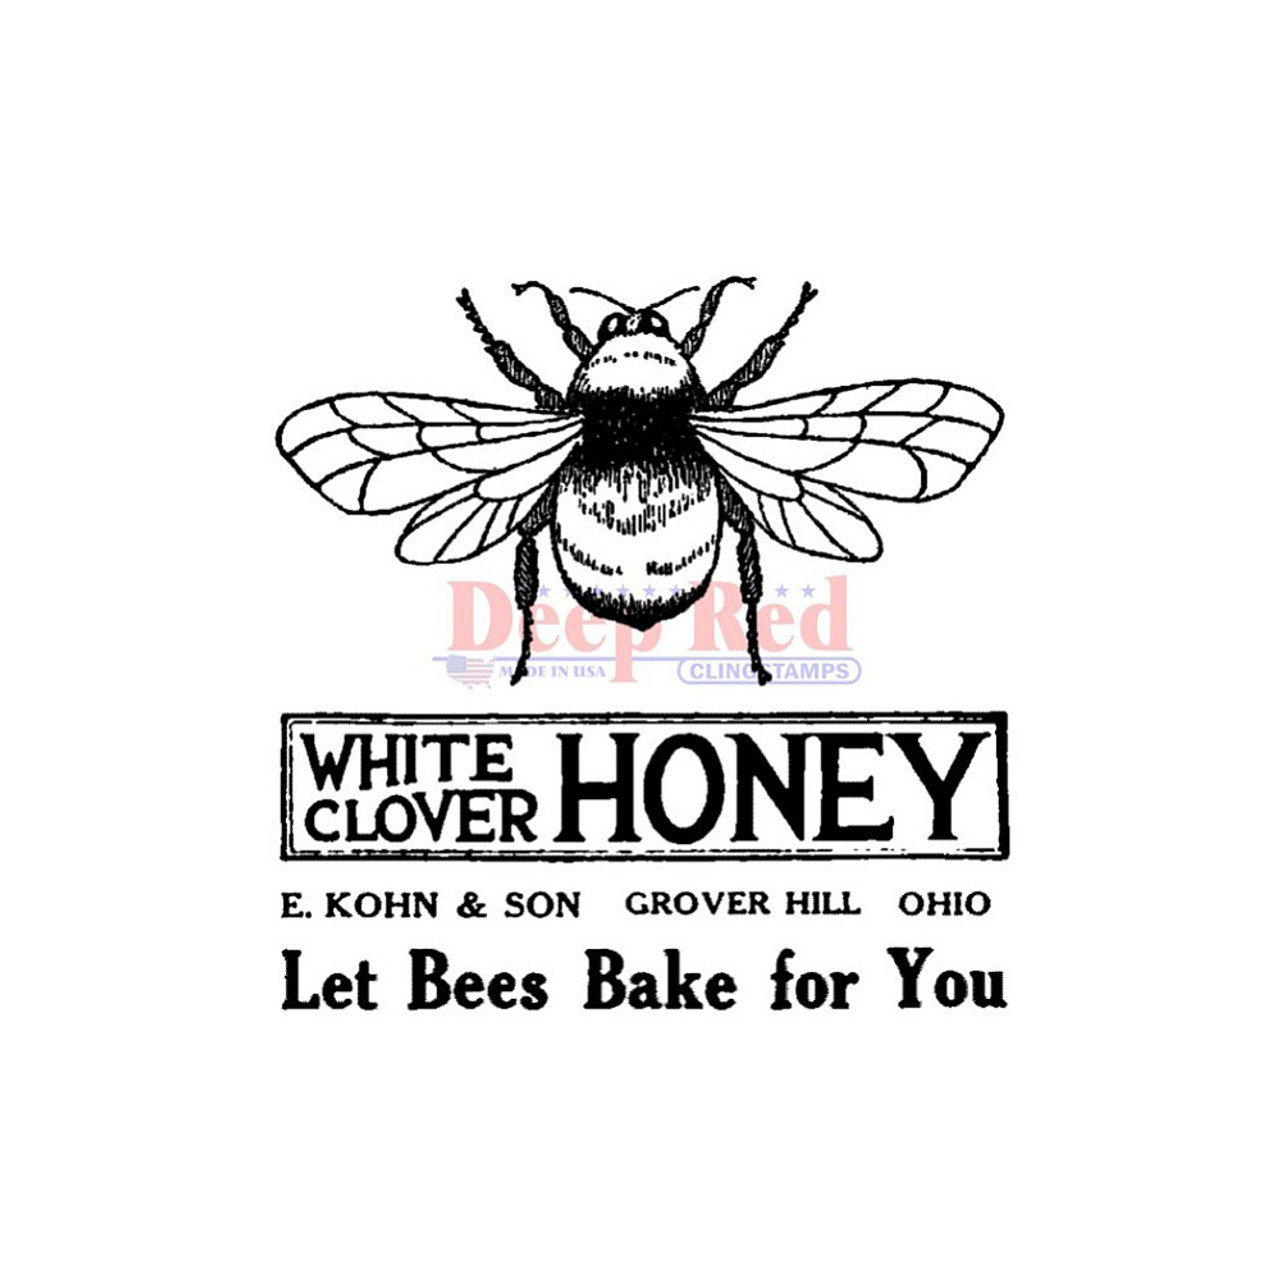 Honey Bee Stamp